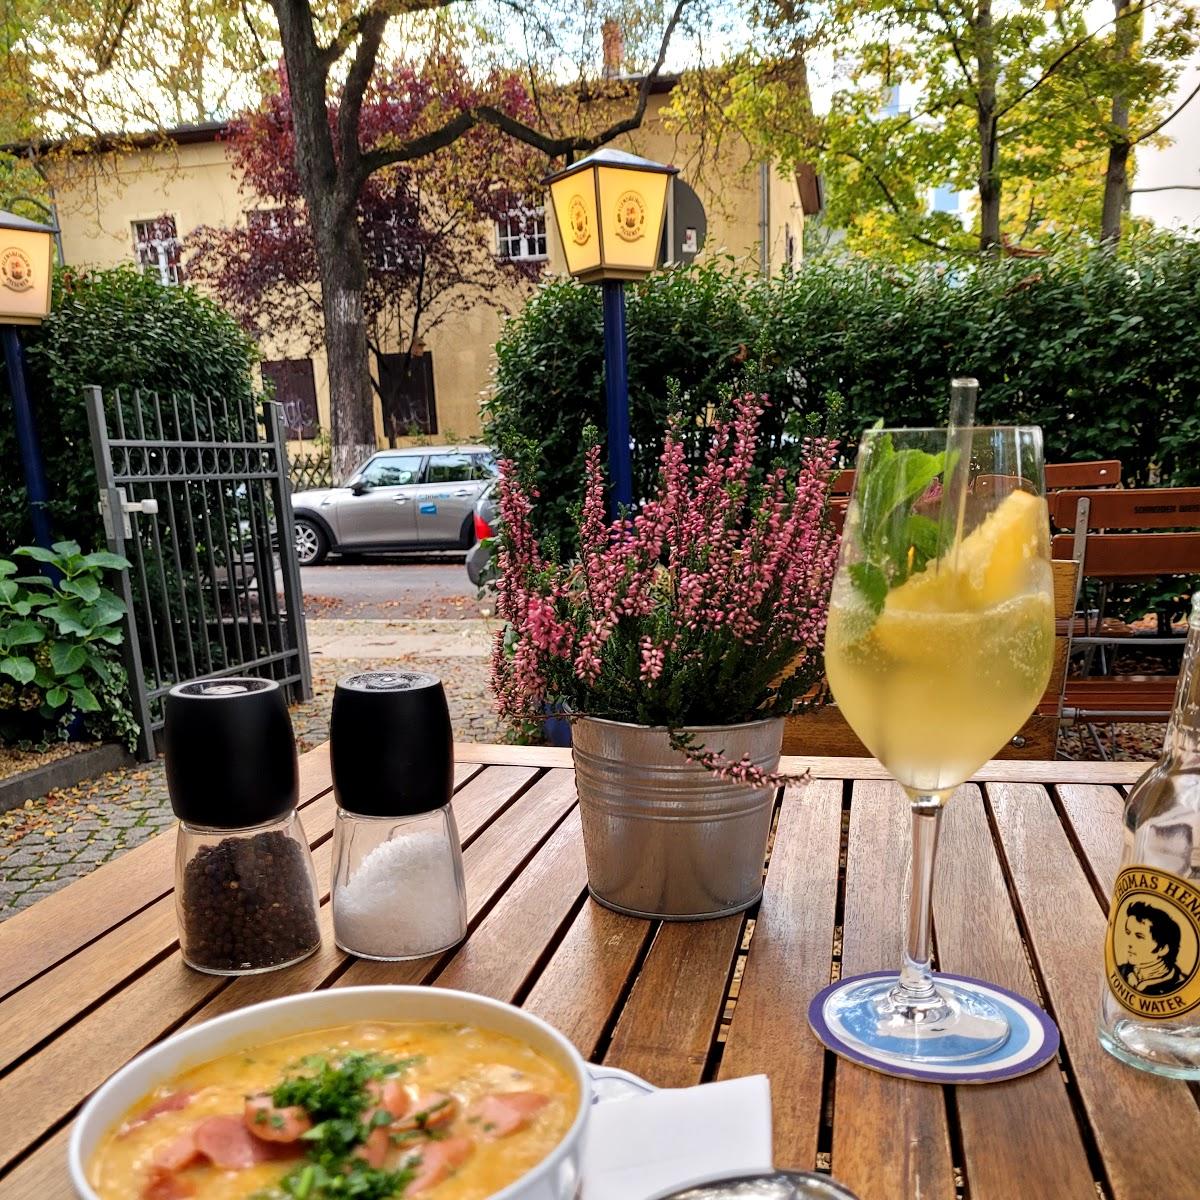 Restaurant "Café Frau Maus" in Berlin